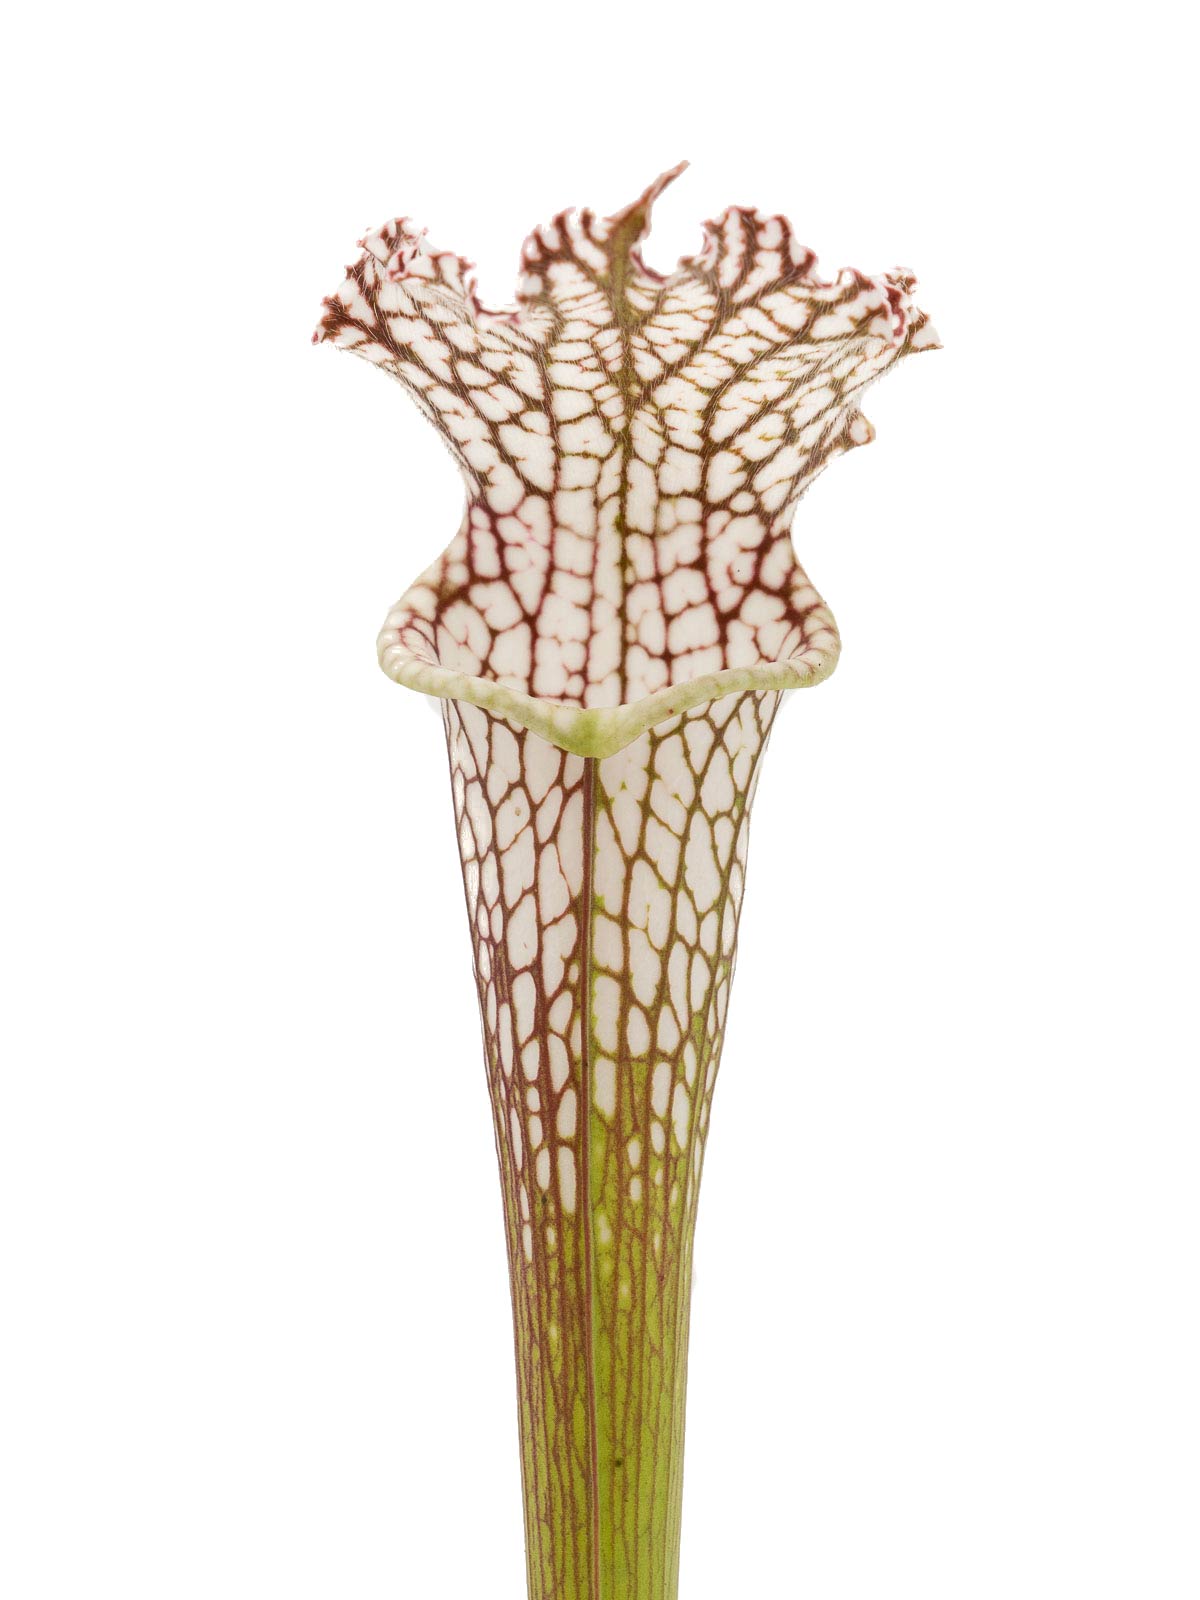 S. leucophylla - MK L06, Perdido, Baldwin County, Alabama